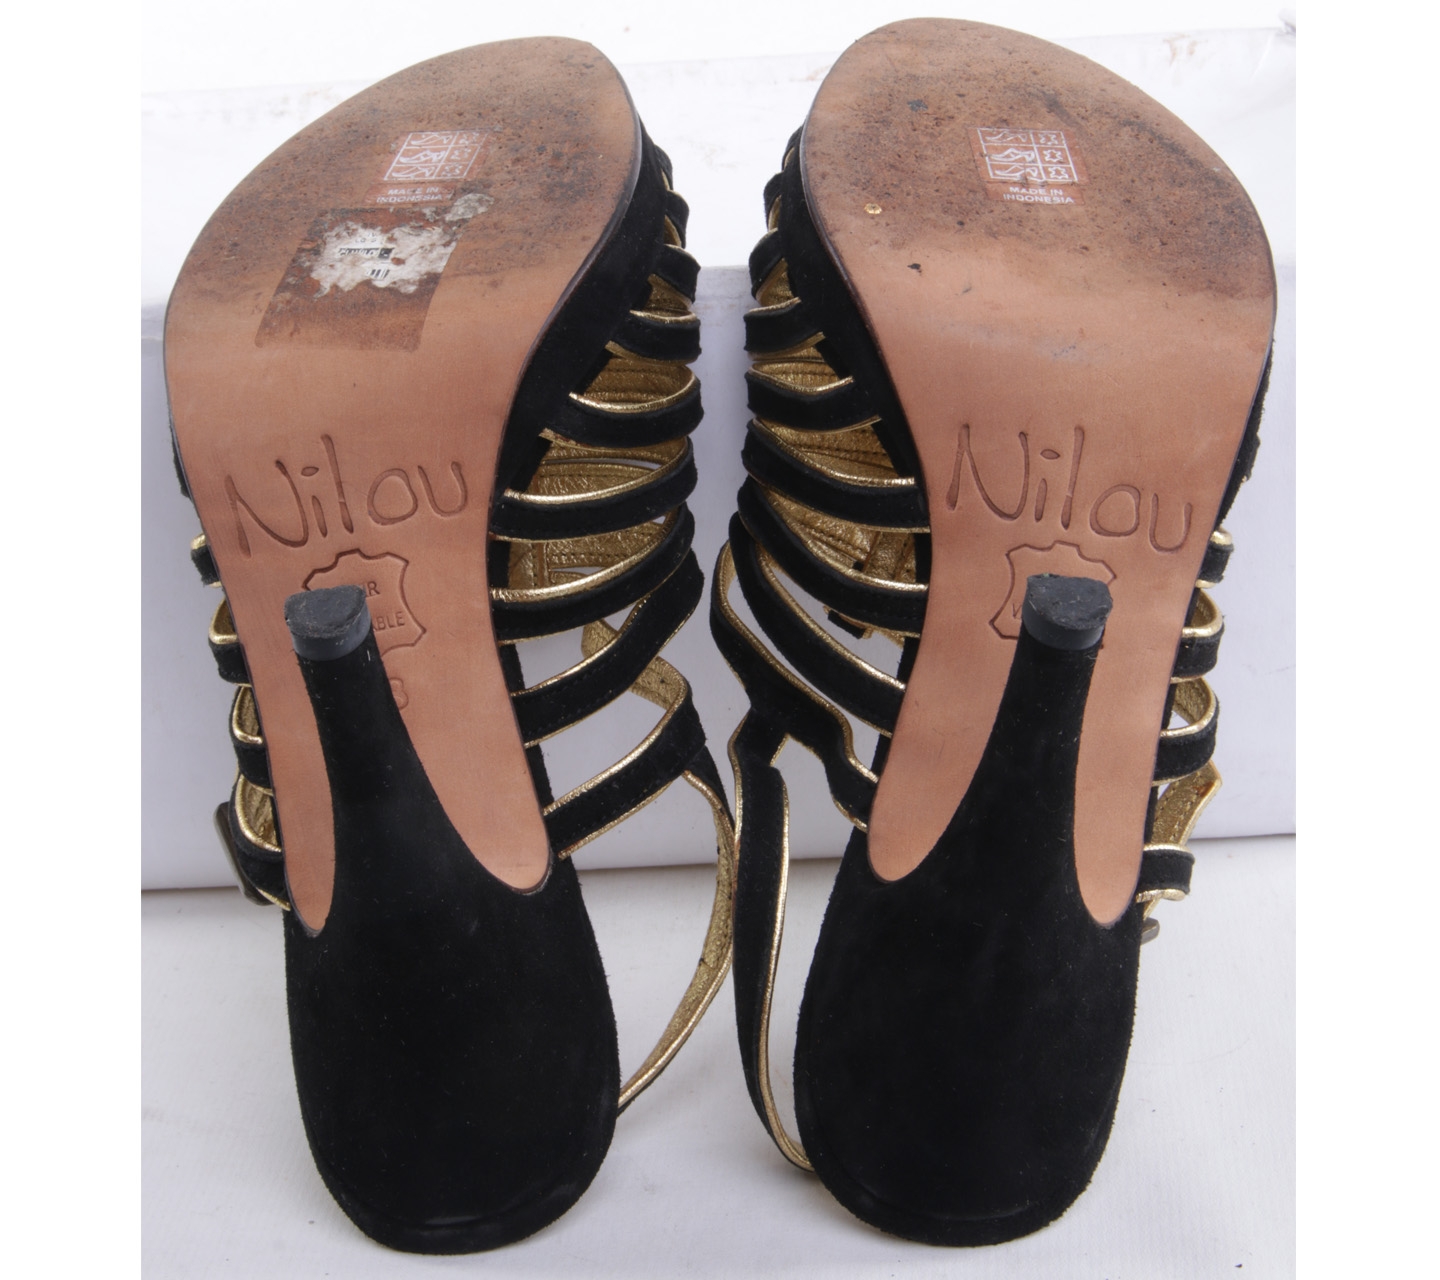 Nilou Black Ivanka Heels